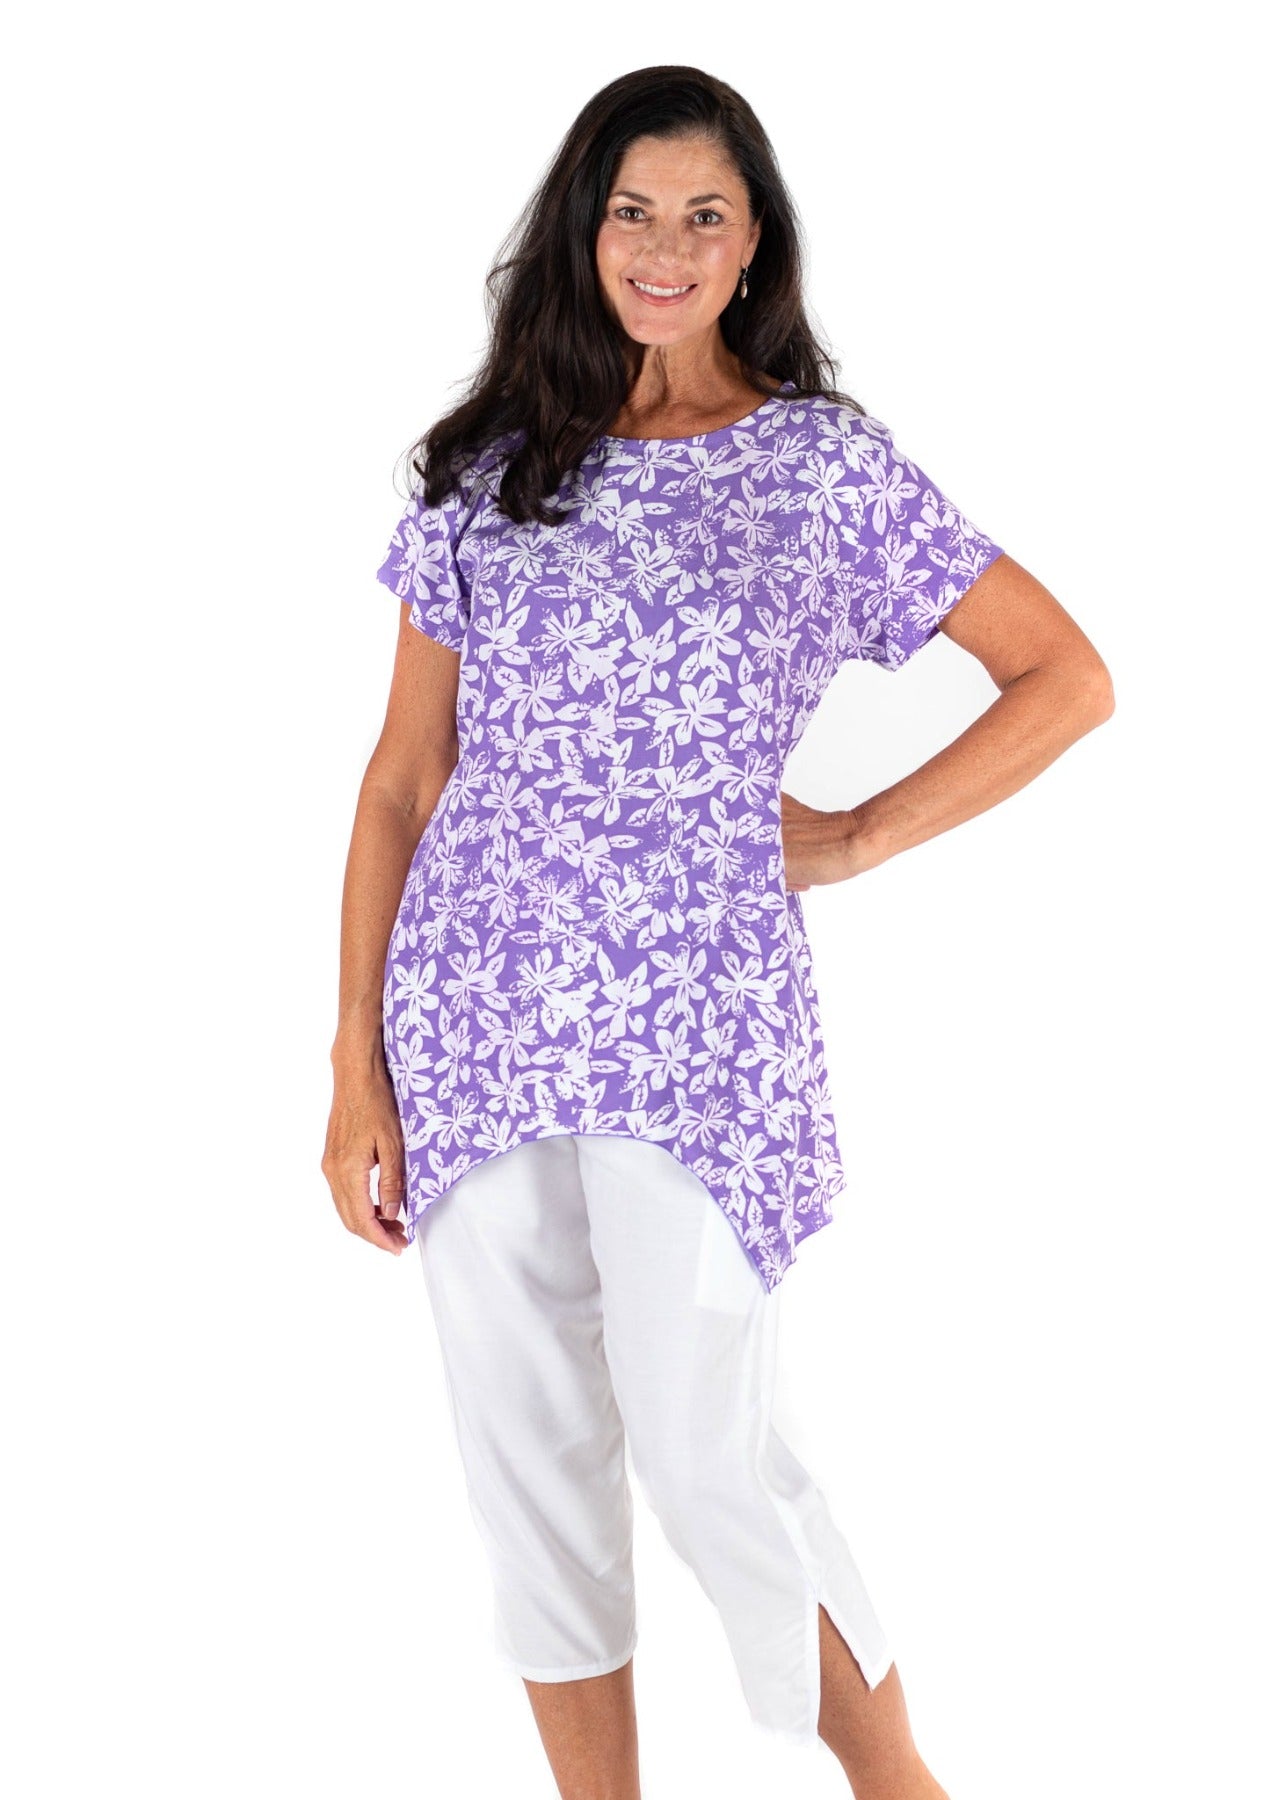 short sleeve jewel neckline shirt top beach vacation wear purple floral comfortable